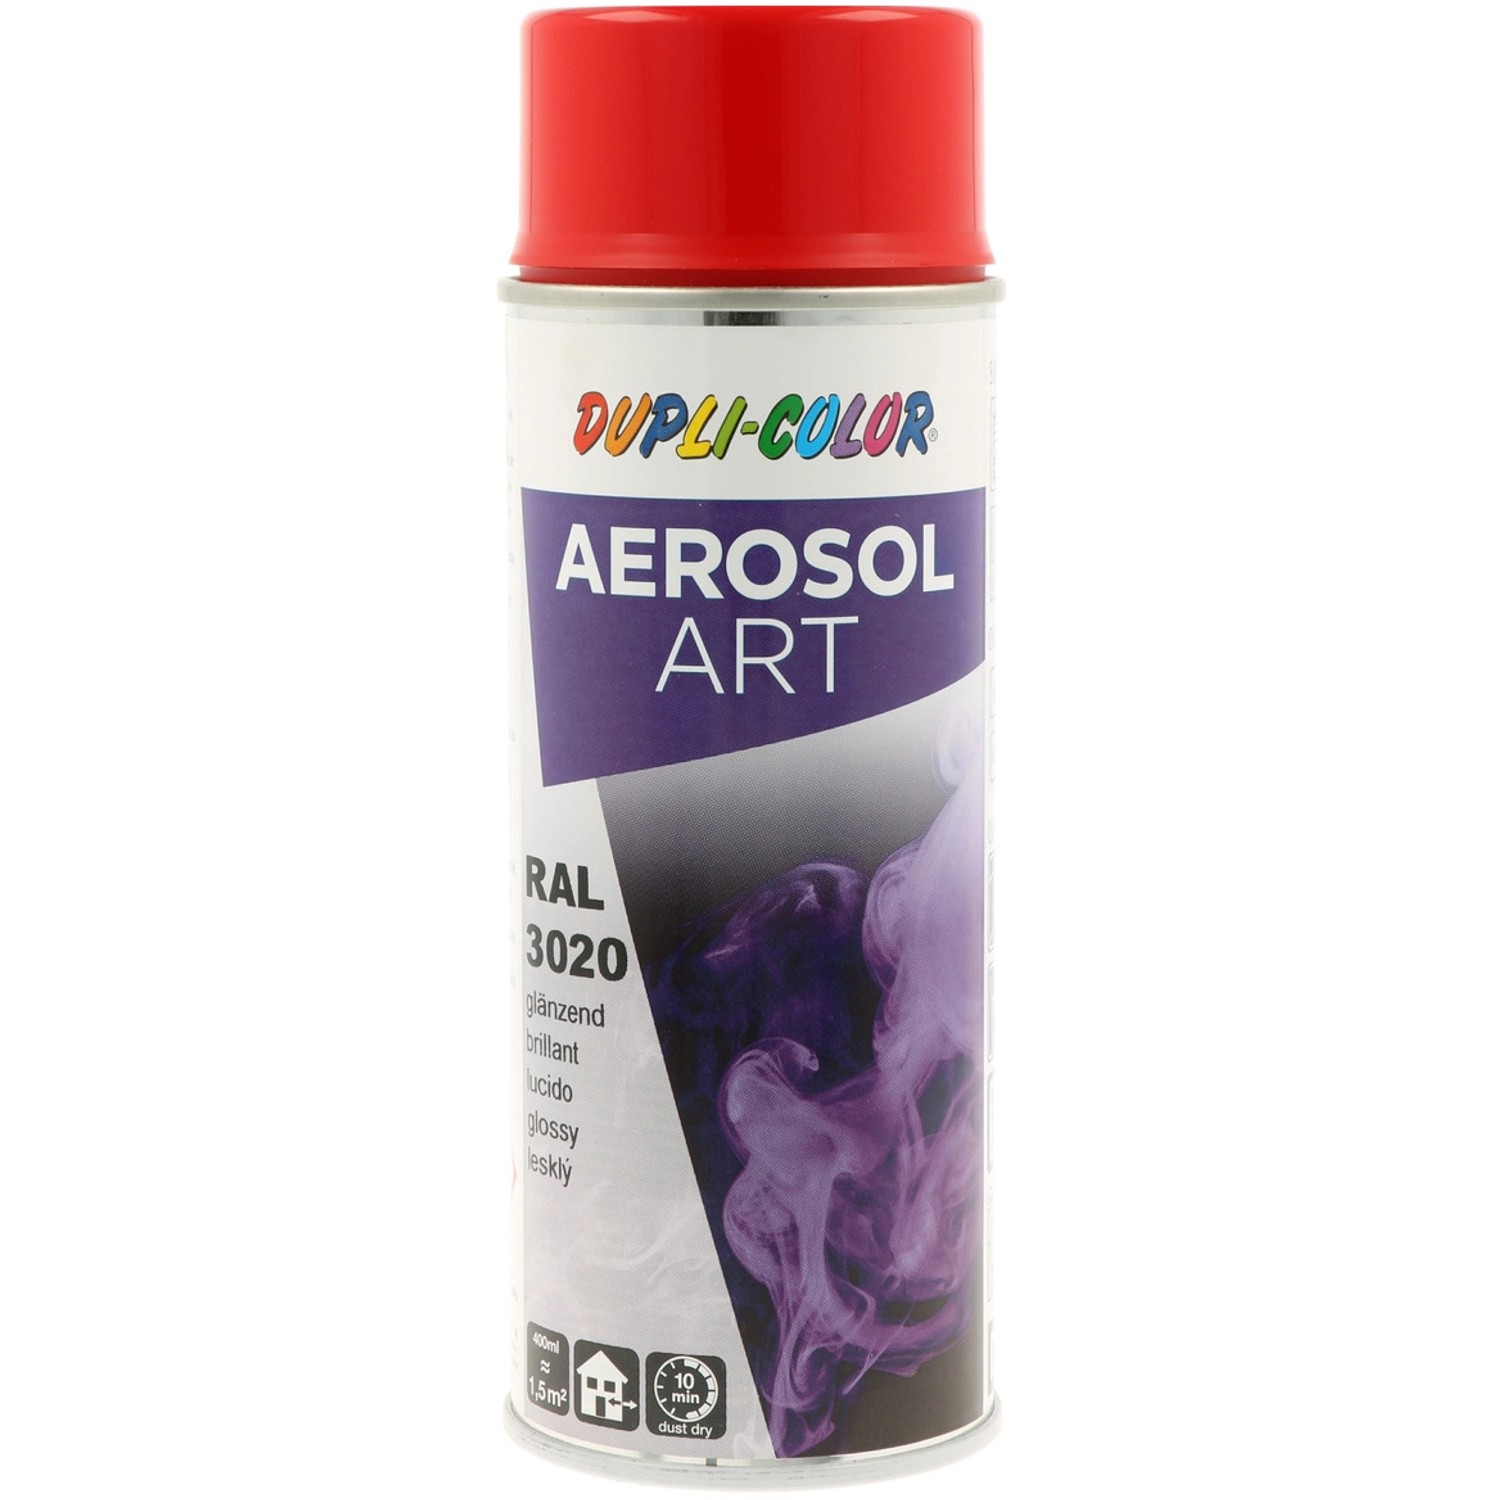 Dupli-Color Aerosol Art RAL 3020 Glänzend 400 ml